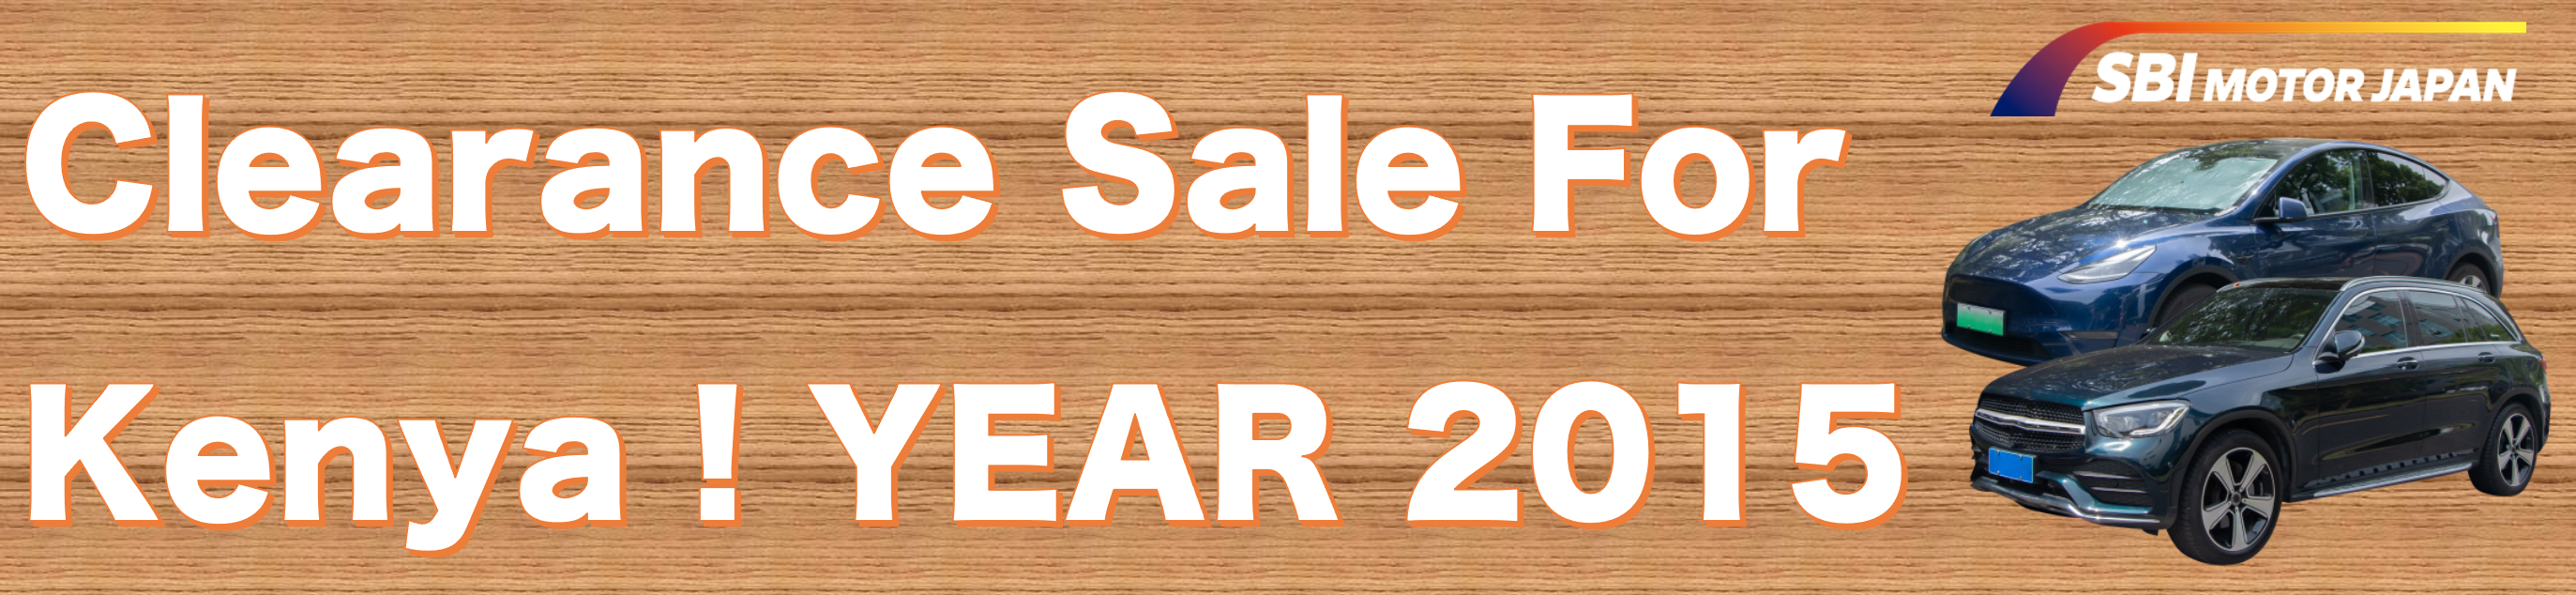 Clearance  sale for kenya year 2015